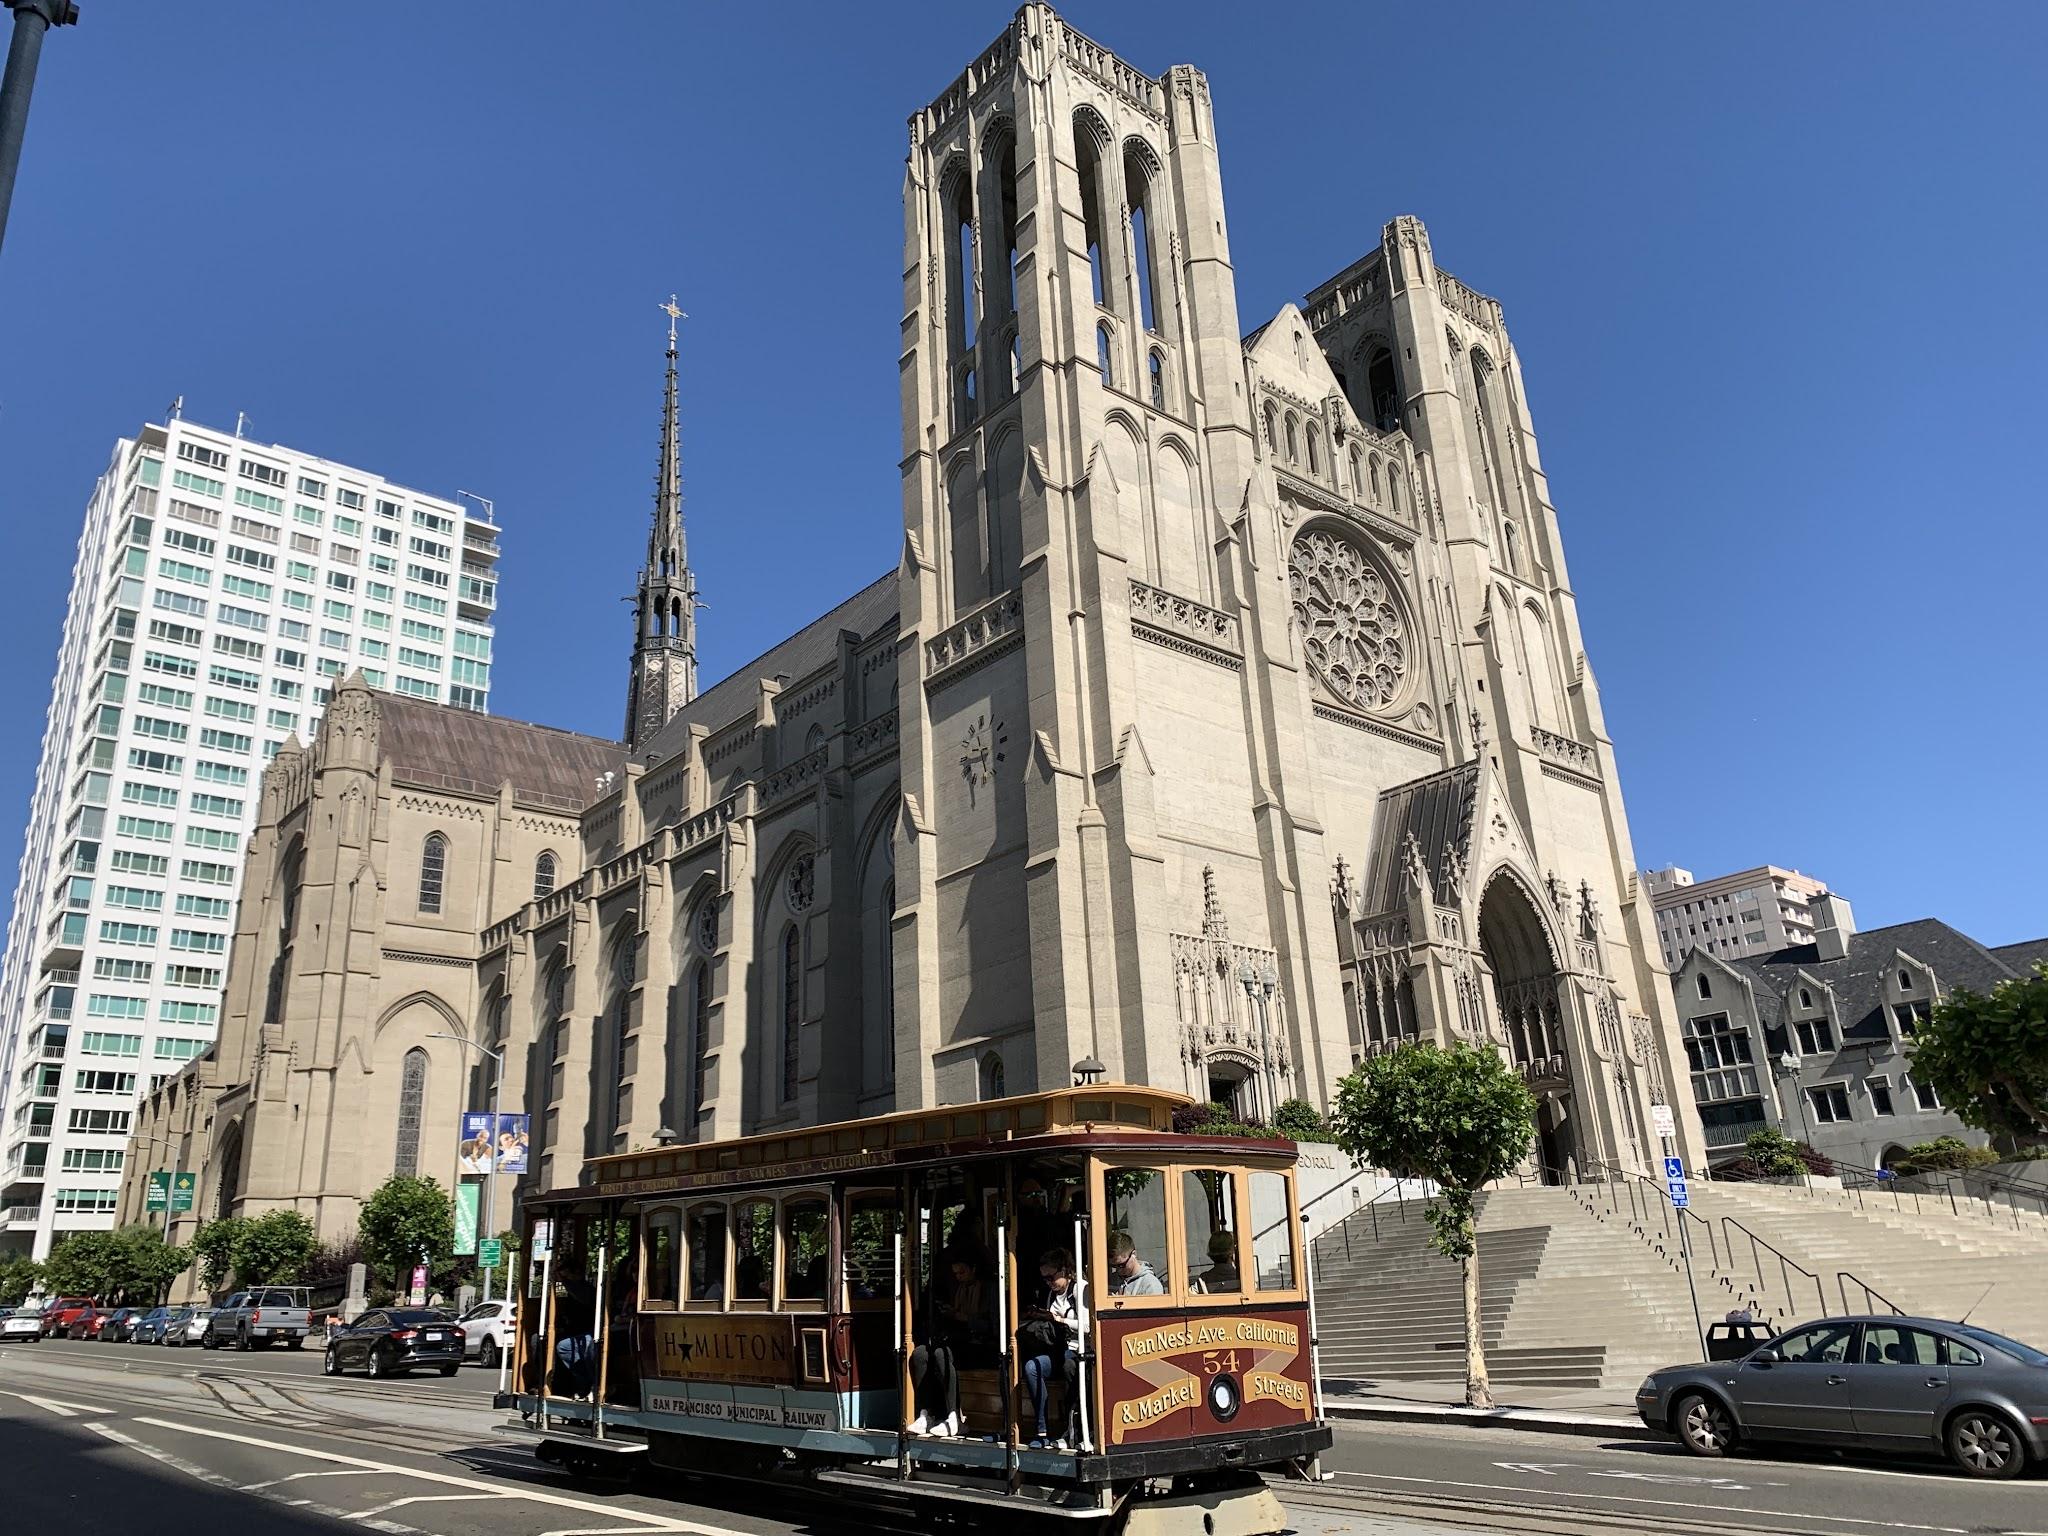 San Francisco photo